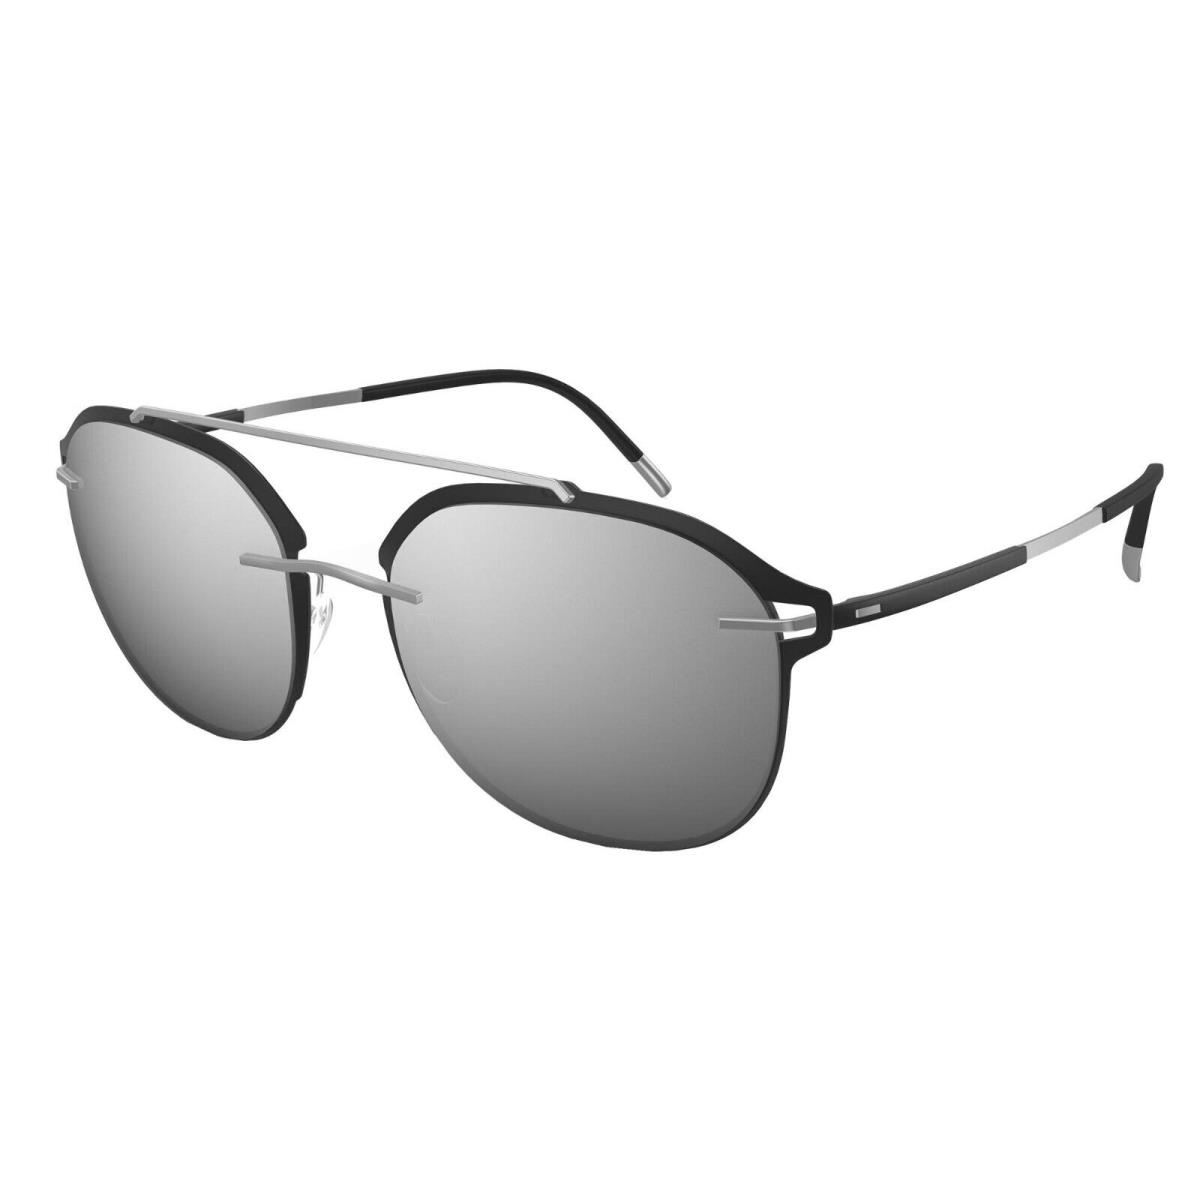 Silhouette Accent Shades 8730 Silver Black/grey Silver Mirrored 9110 Sunglasses